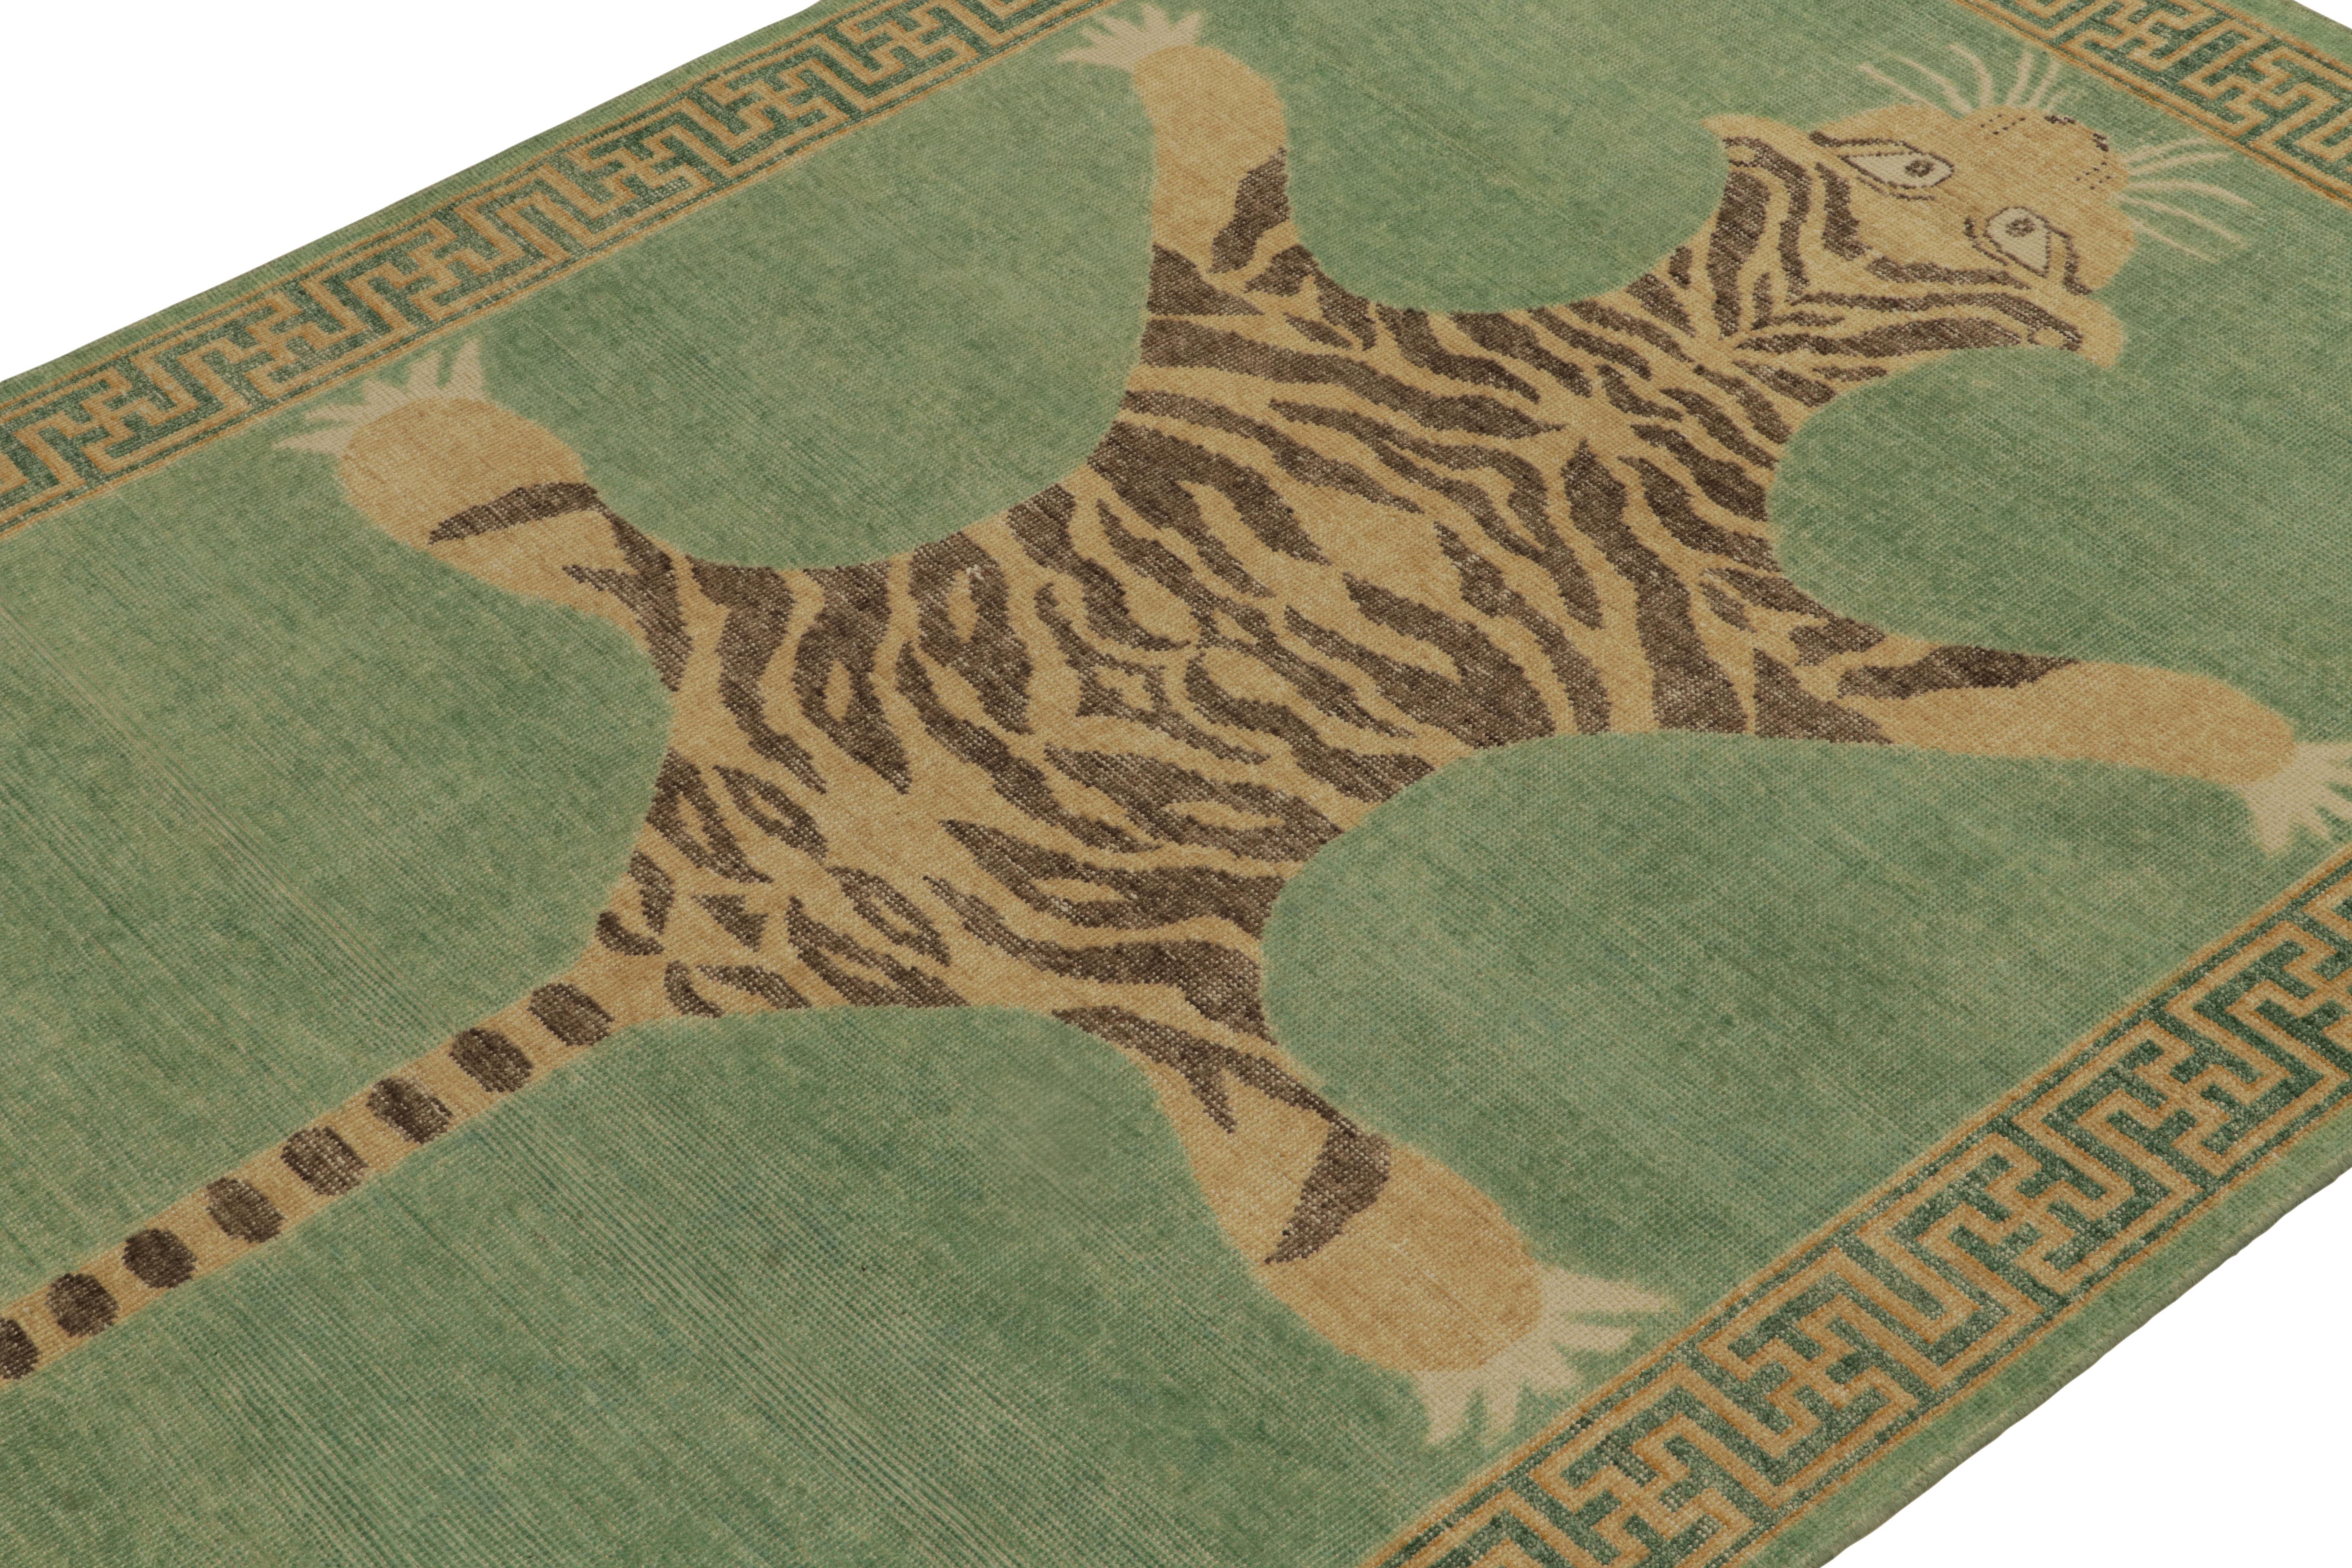 Indian Rug & Kilim’s Distressed Tiger Skin Style Rug in Green, Beige & Black Pictorial For Sale